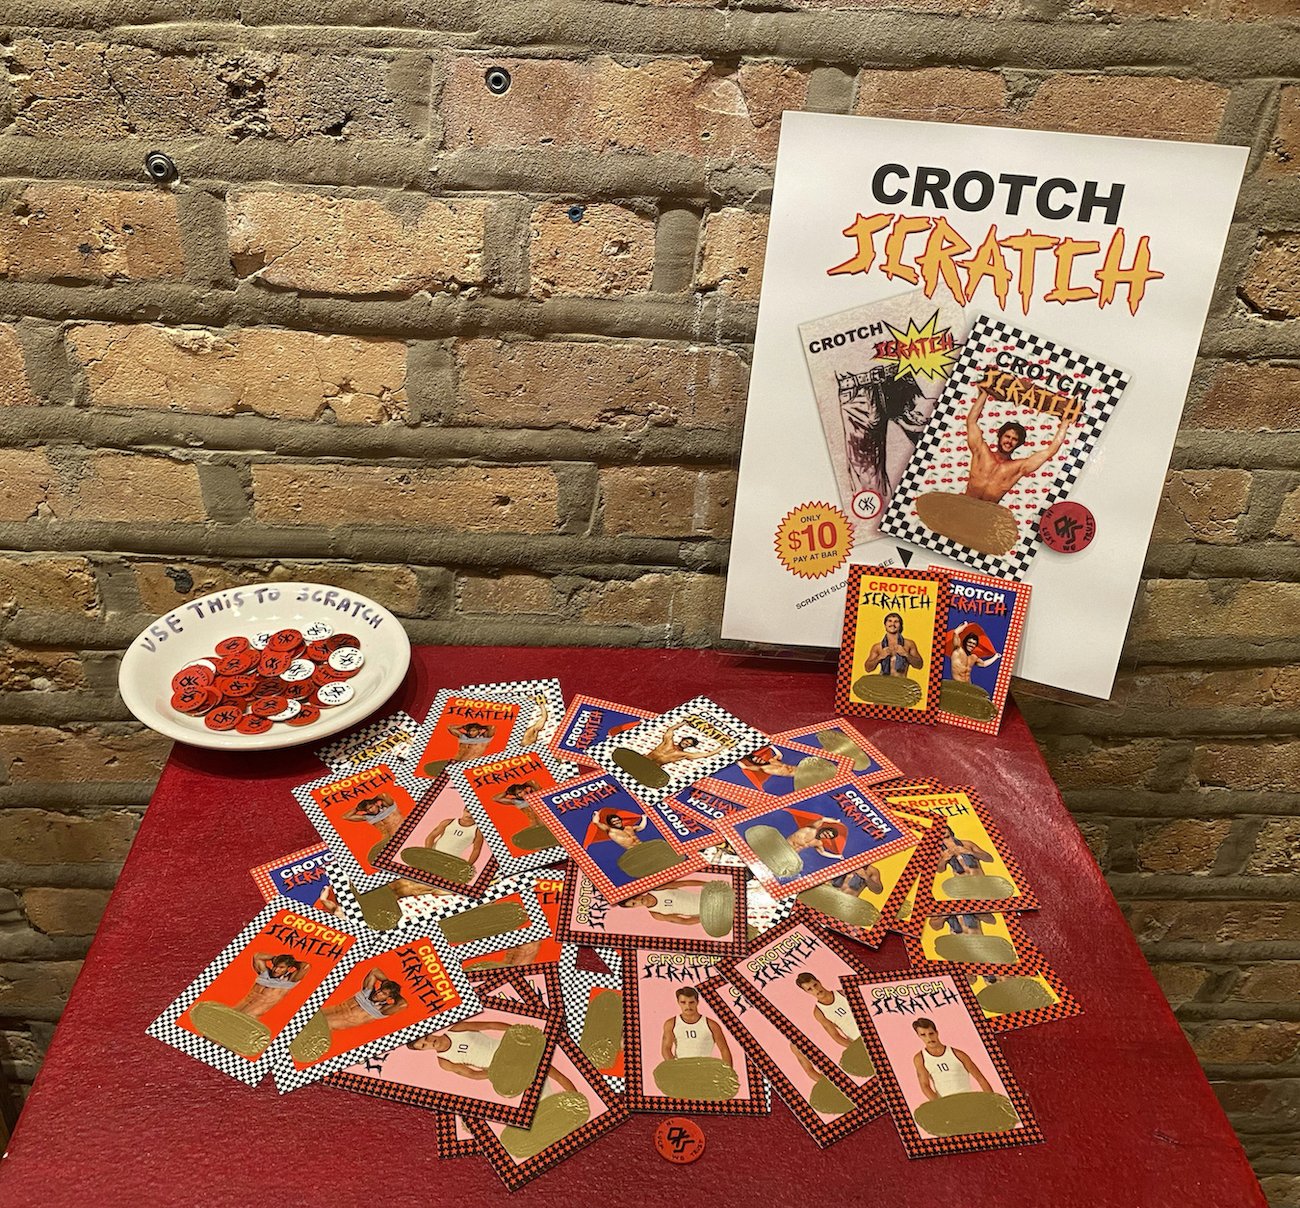 7 OKS Crotch Scratch.jpg